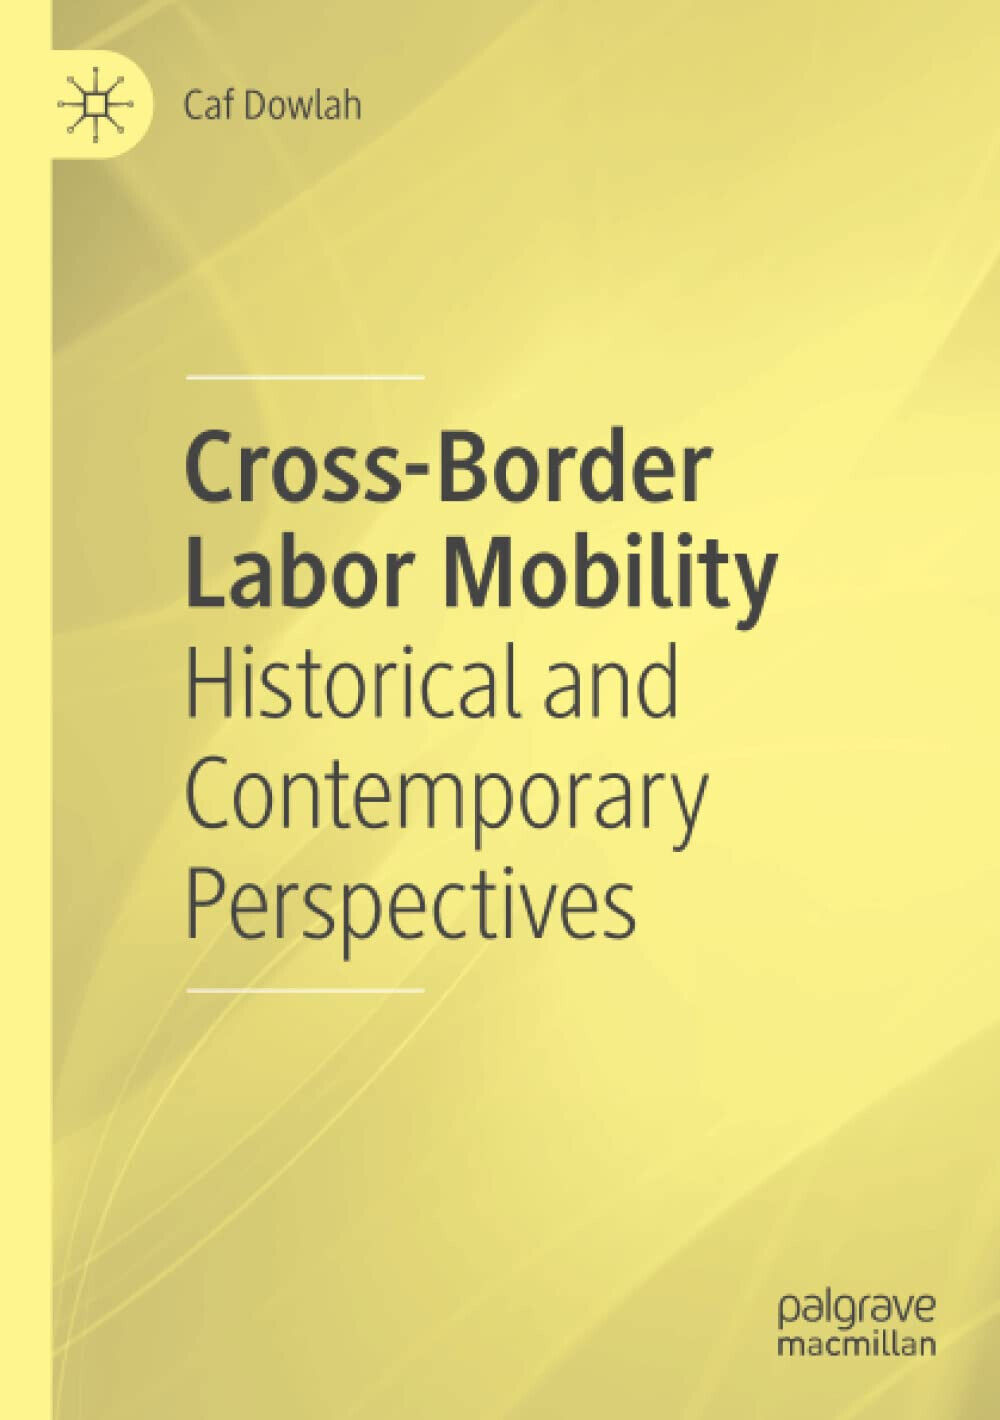 Cross-Border Labor Mobility - Caf Dowlah - Palgrave, 2021